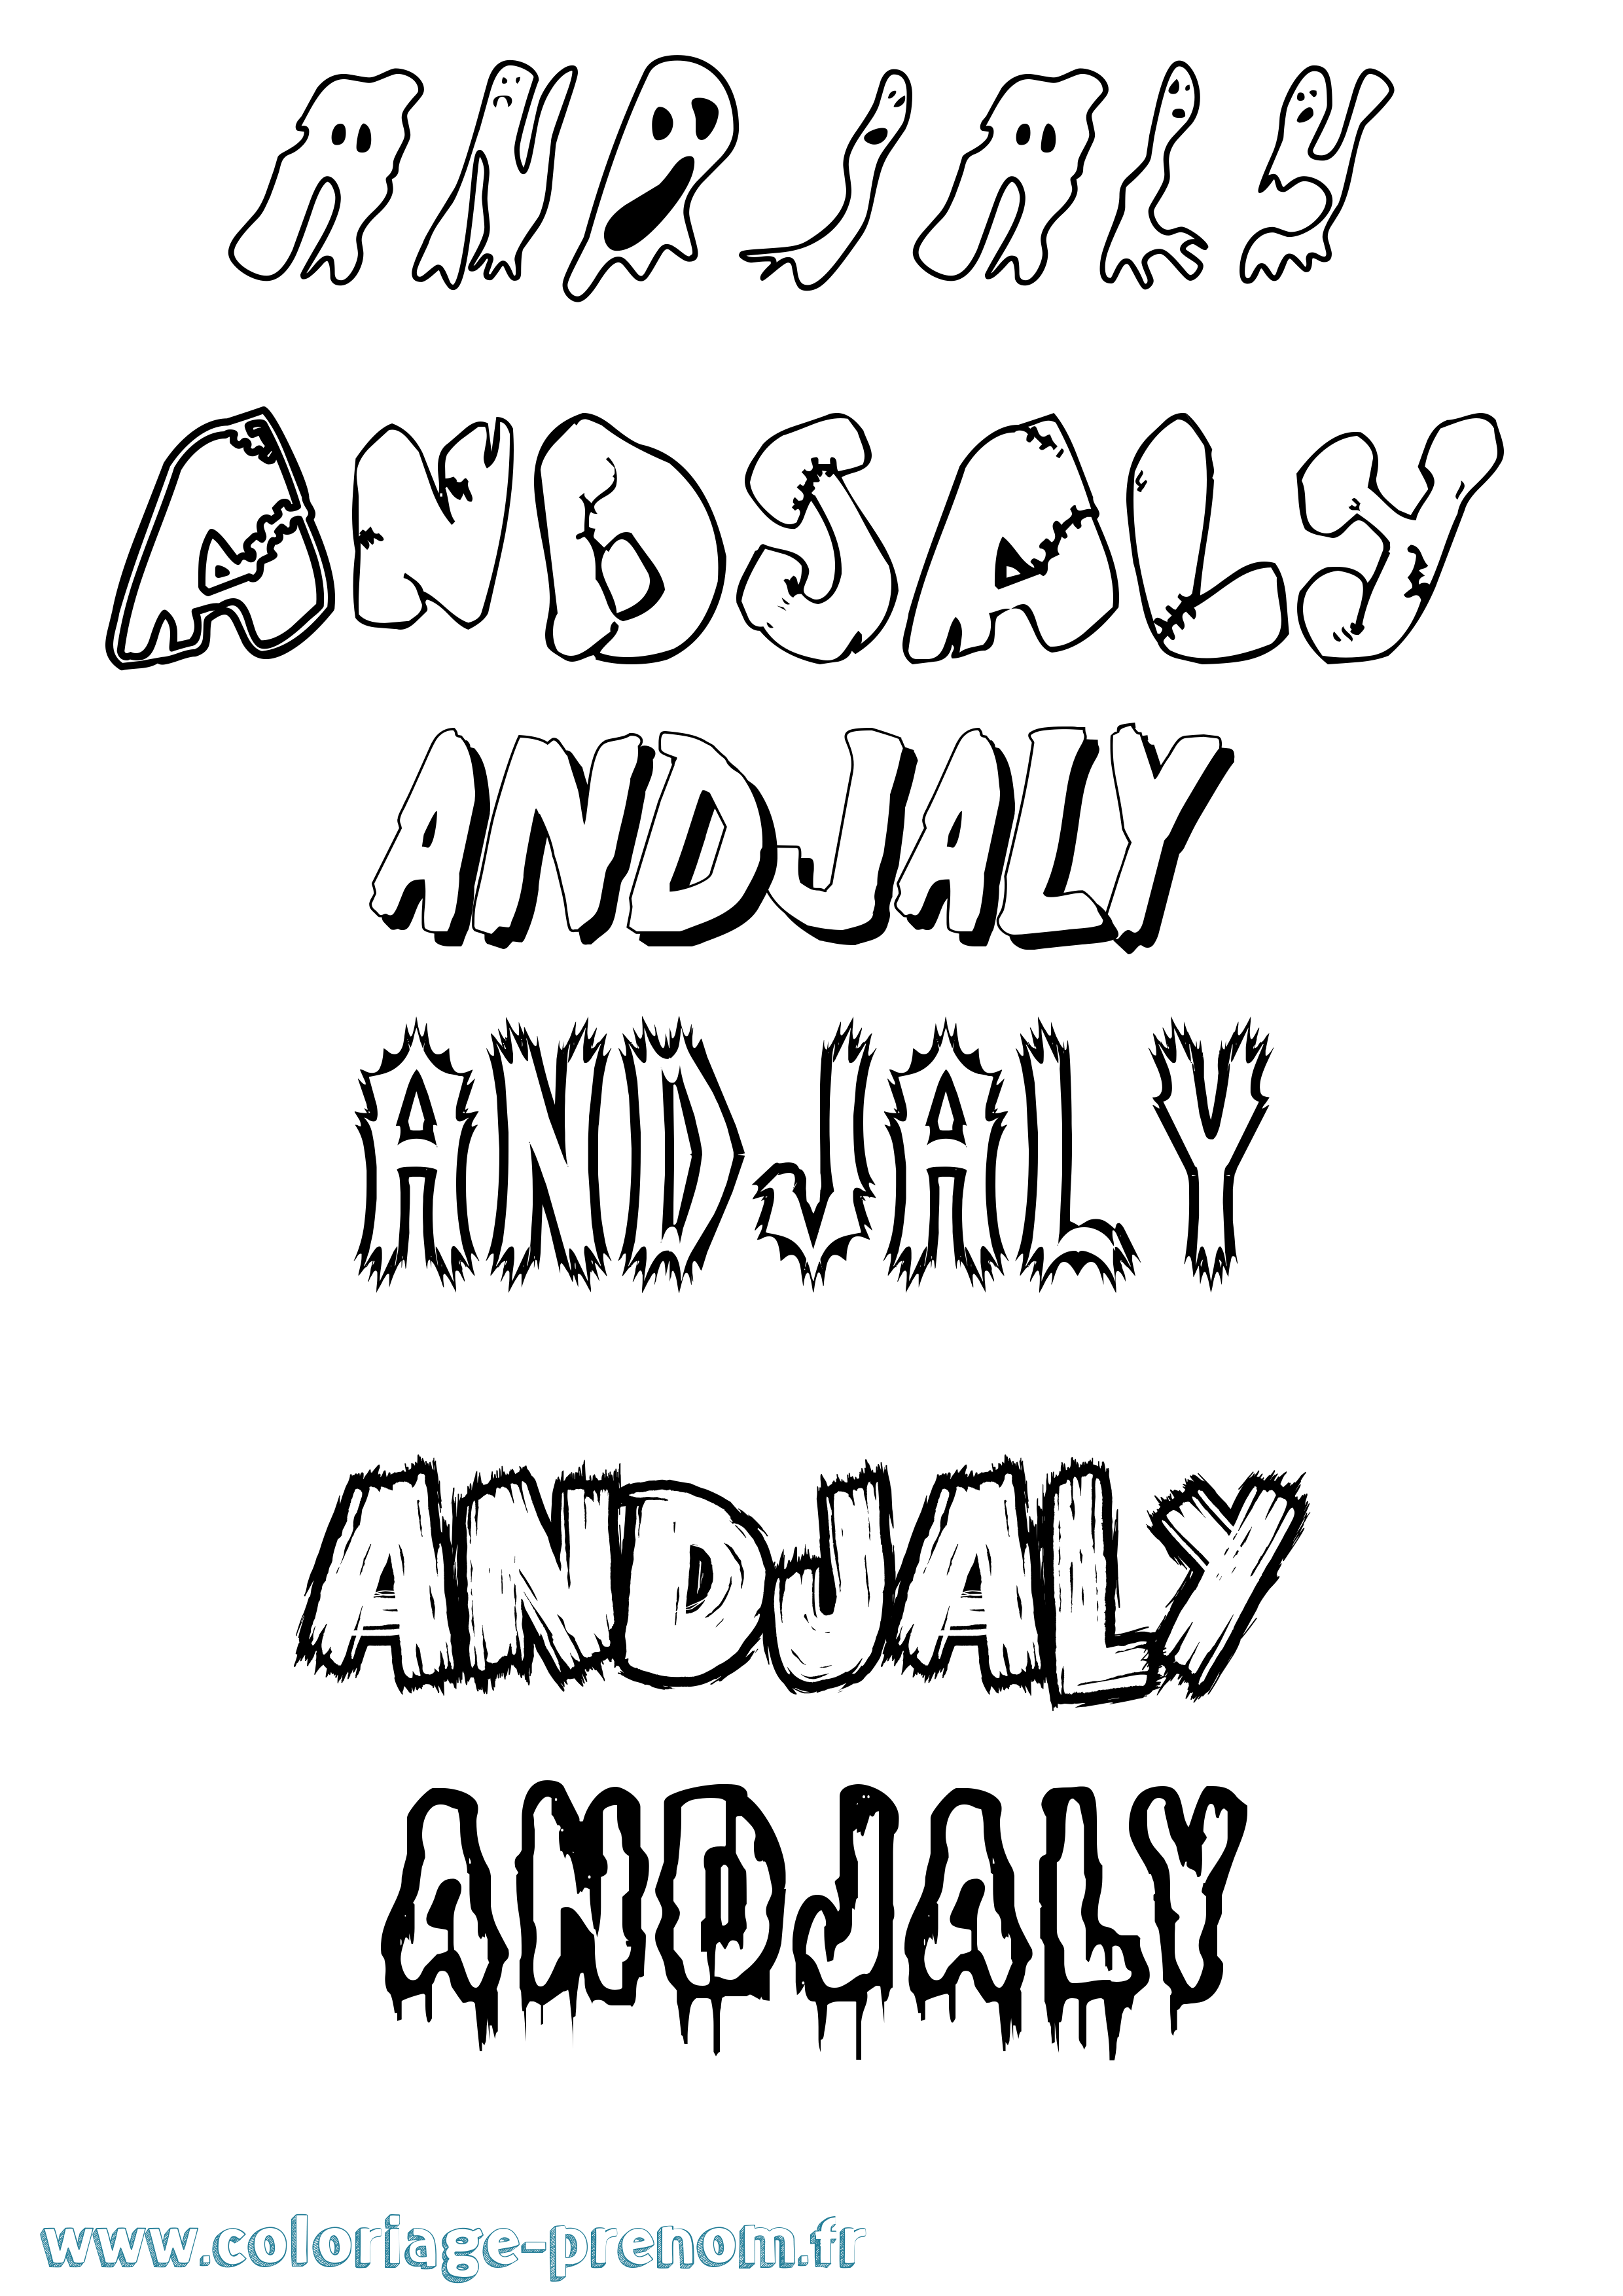 Coloriage prénom Andjaly Frisson